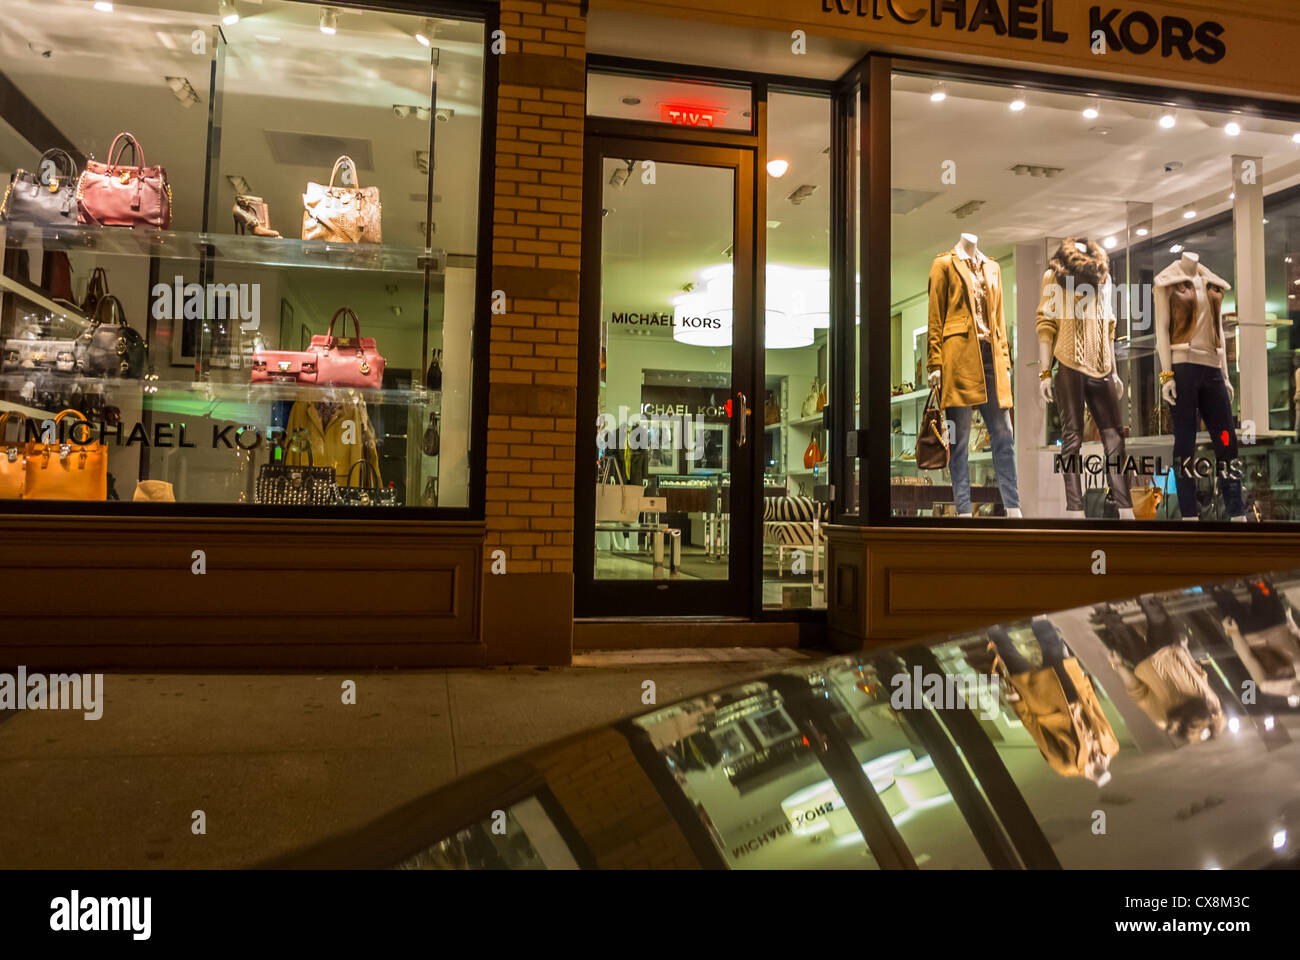 Michael Kors Storefront on Fifth Avenue, NYC, USA Stock Photo - Alamy